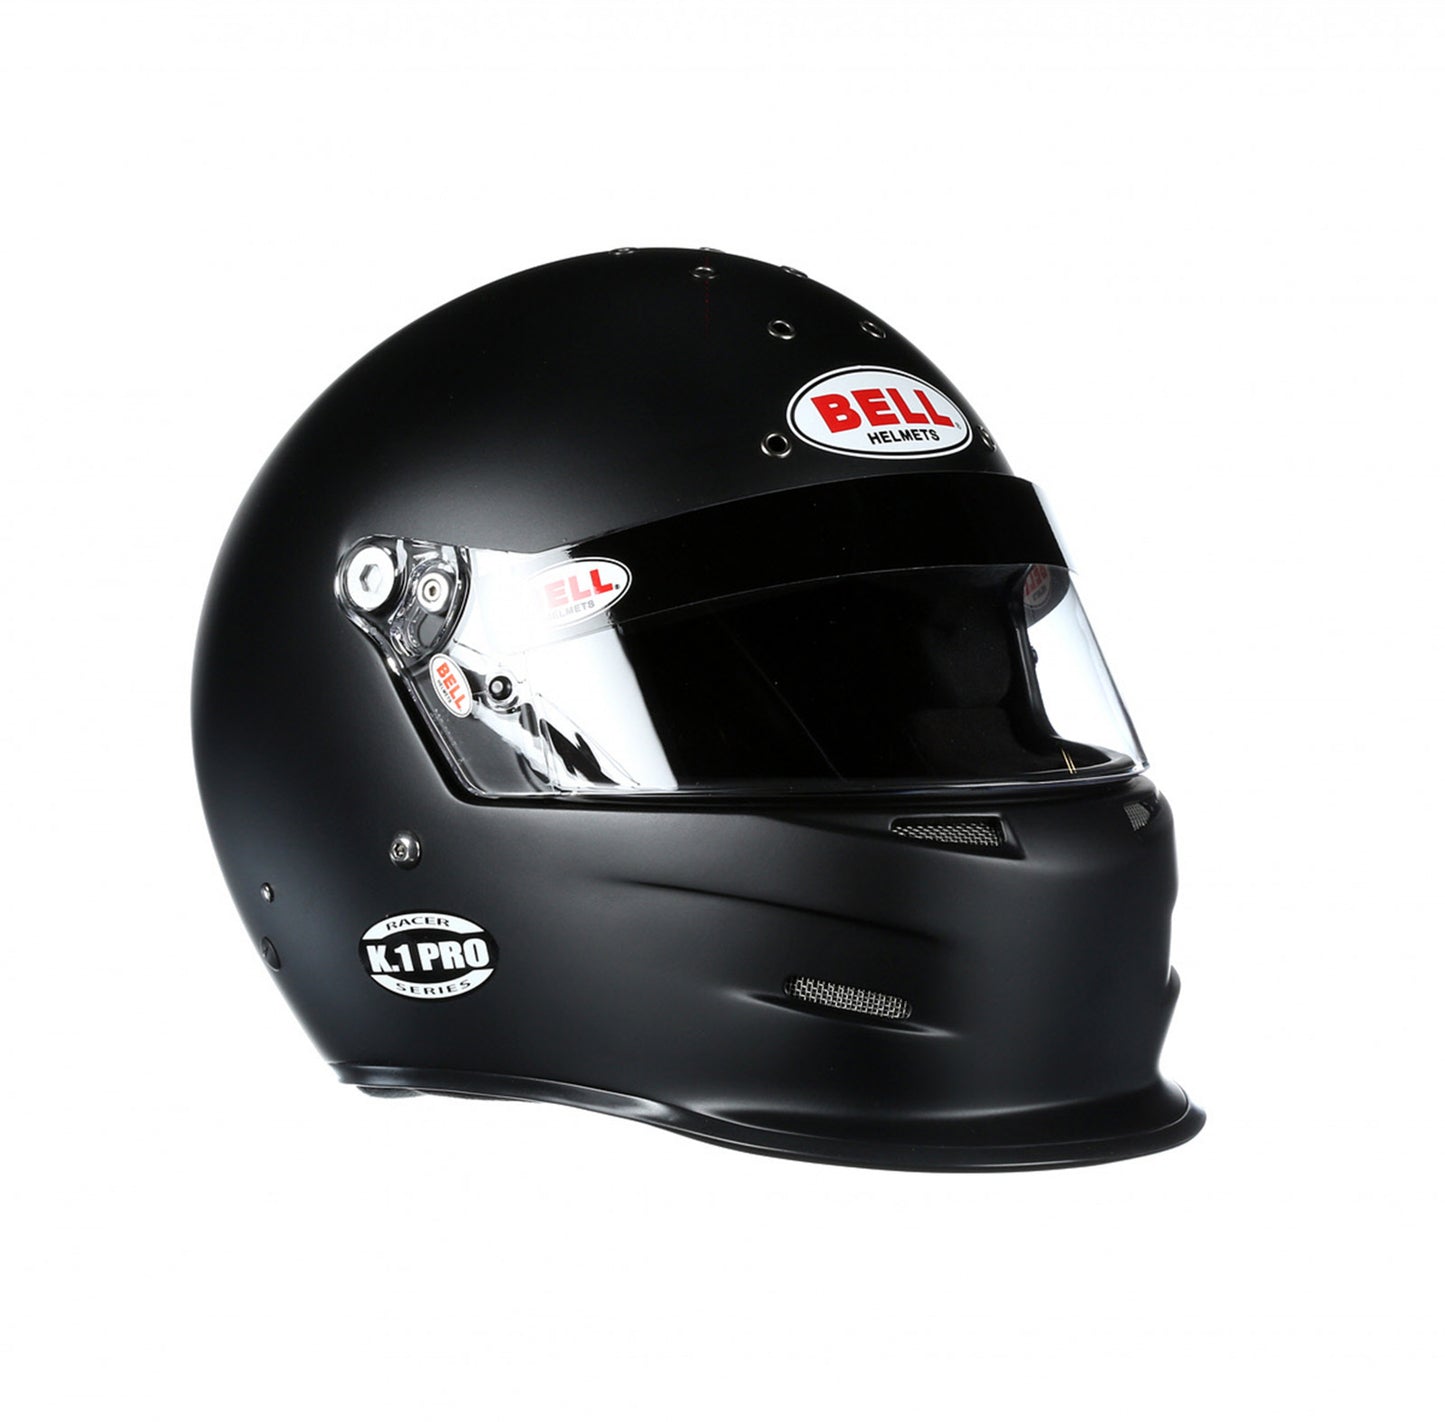 Bell K1 Pro Matte Black Helmet Size X Small 1420A12